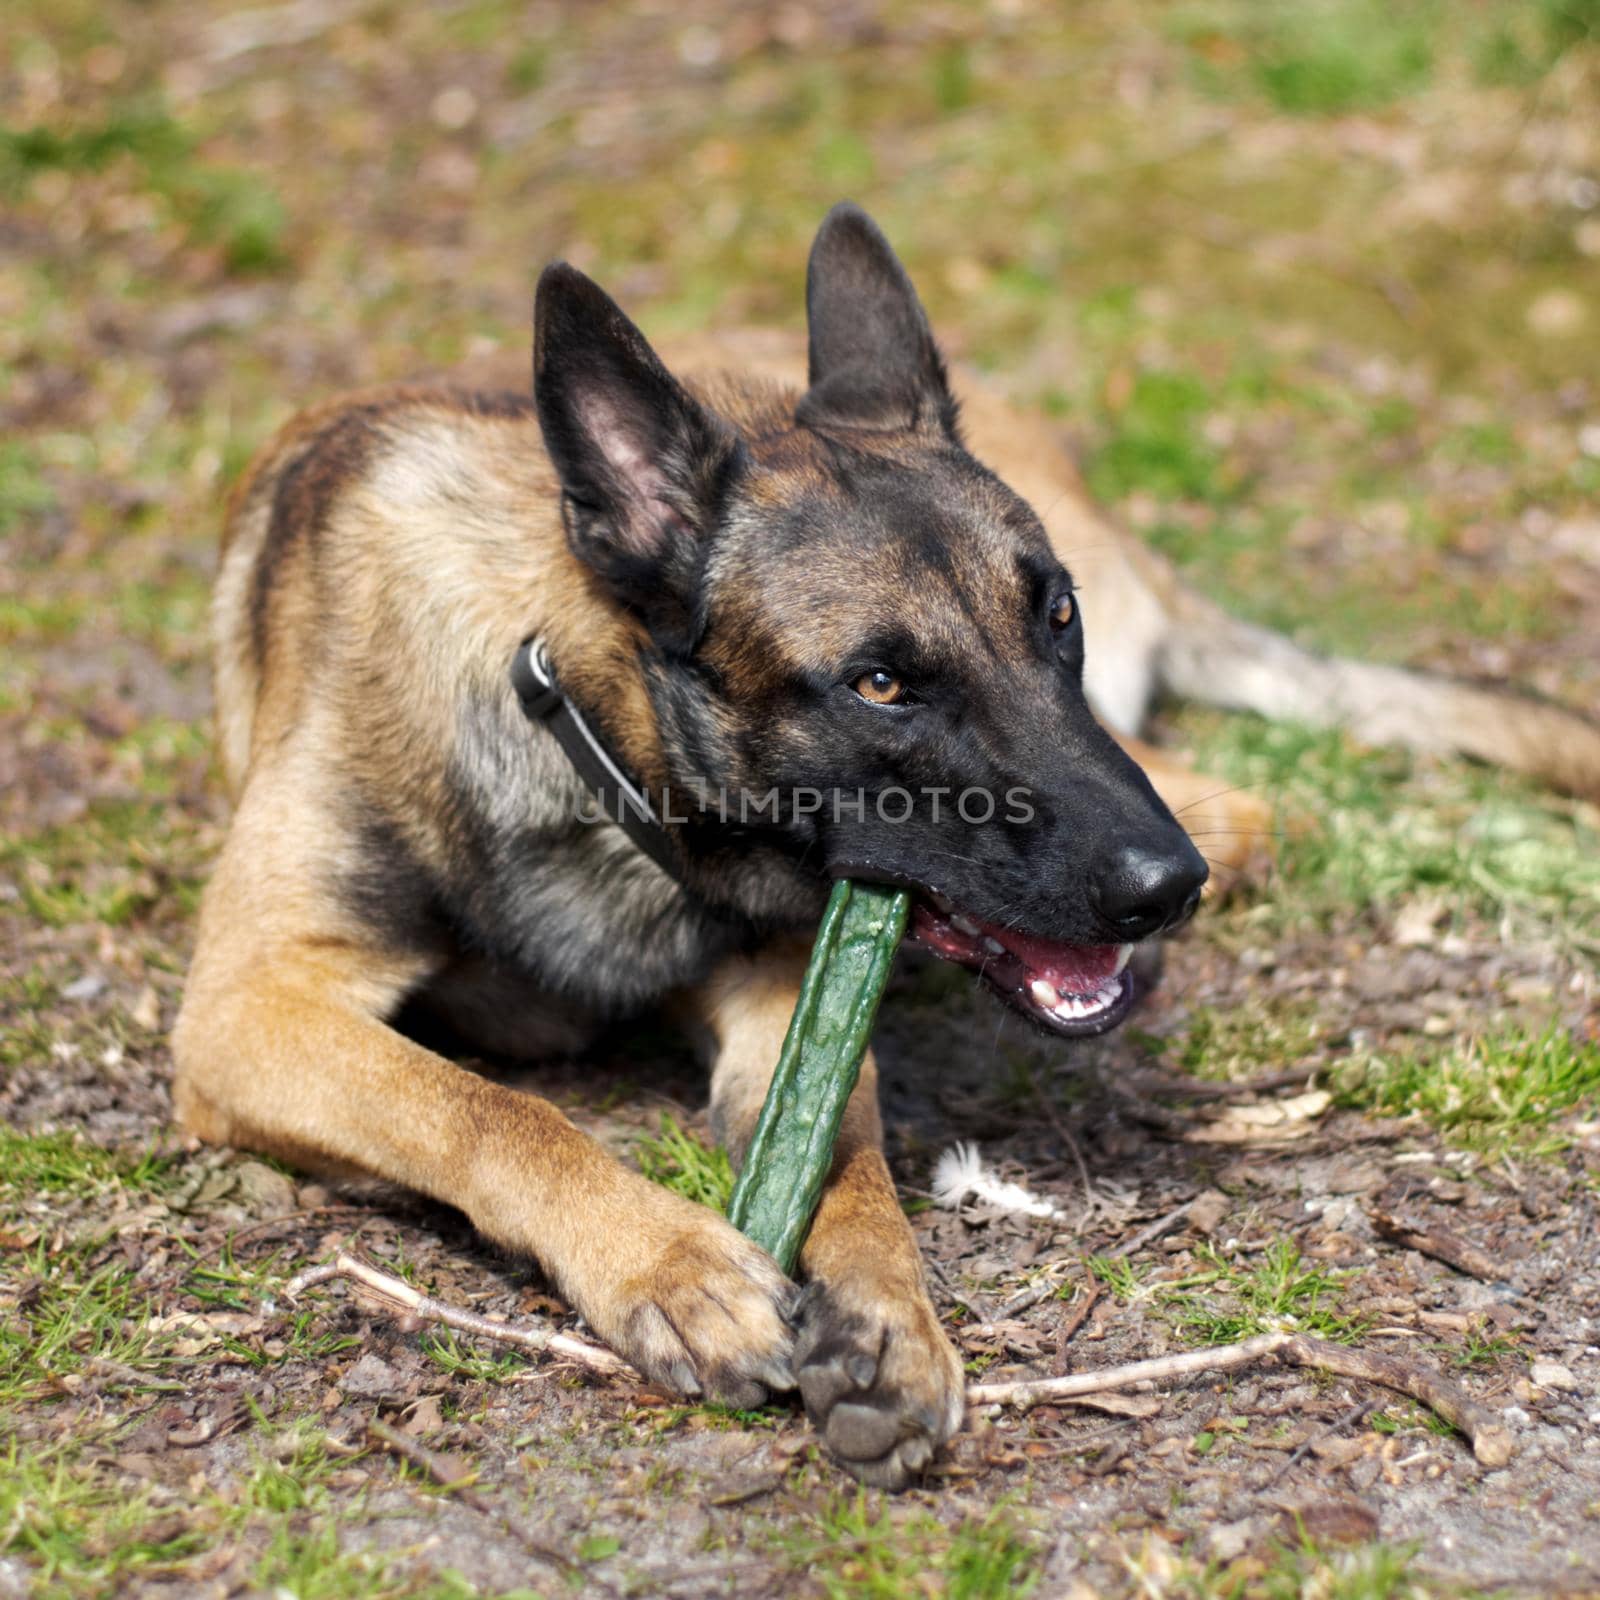 An alsatian chewing on a stick.